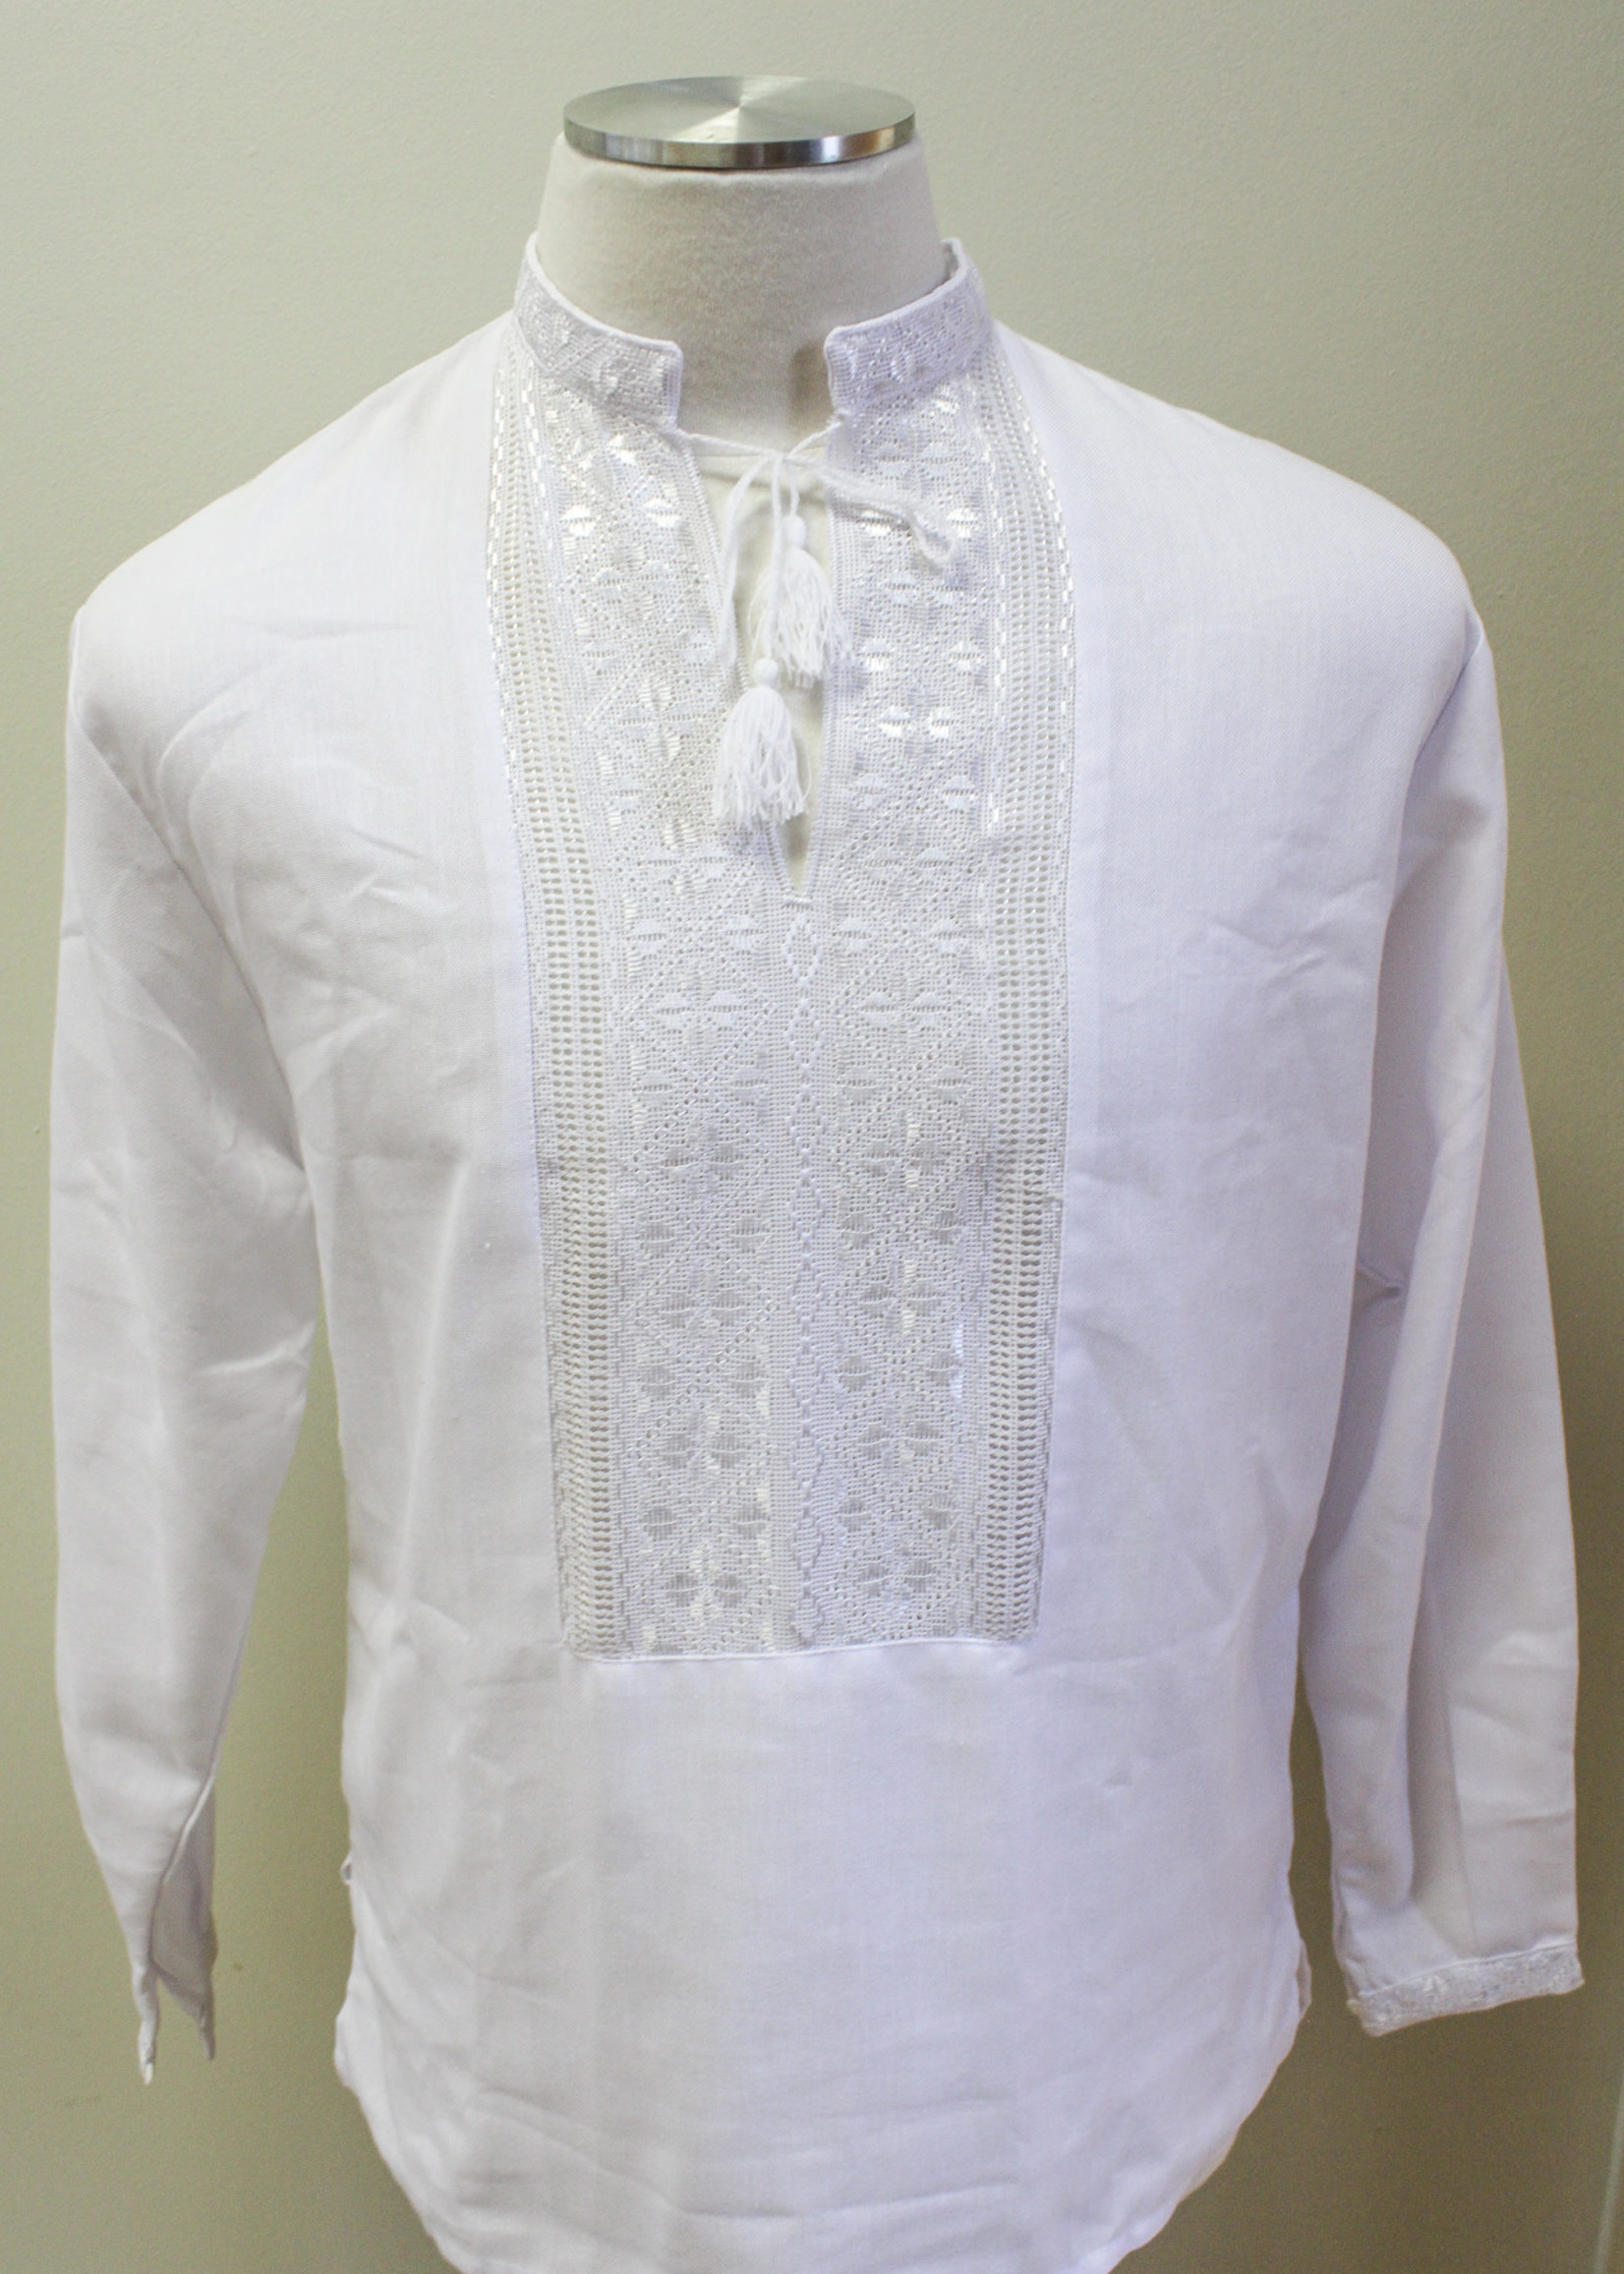 Shirt (Men's) (L)  White with Silk White